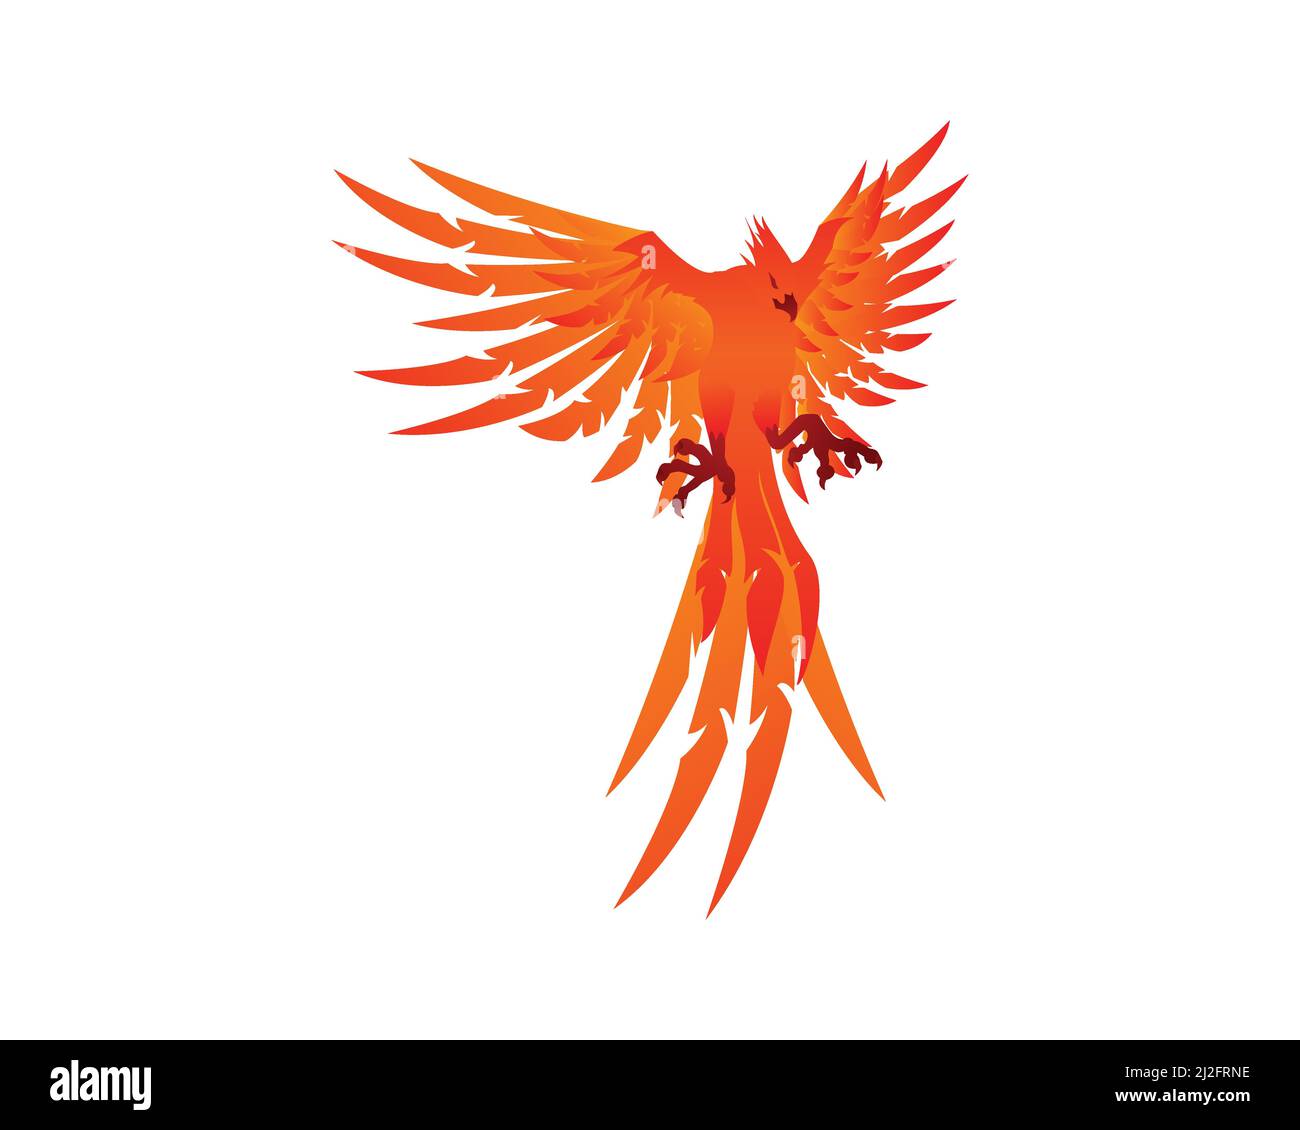 Detailed Flying Phoenix Bird Illustration Vector Stock Vector Image